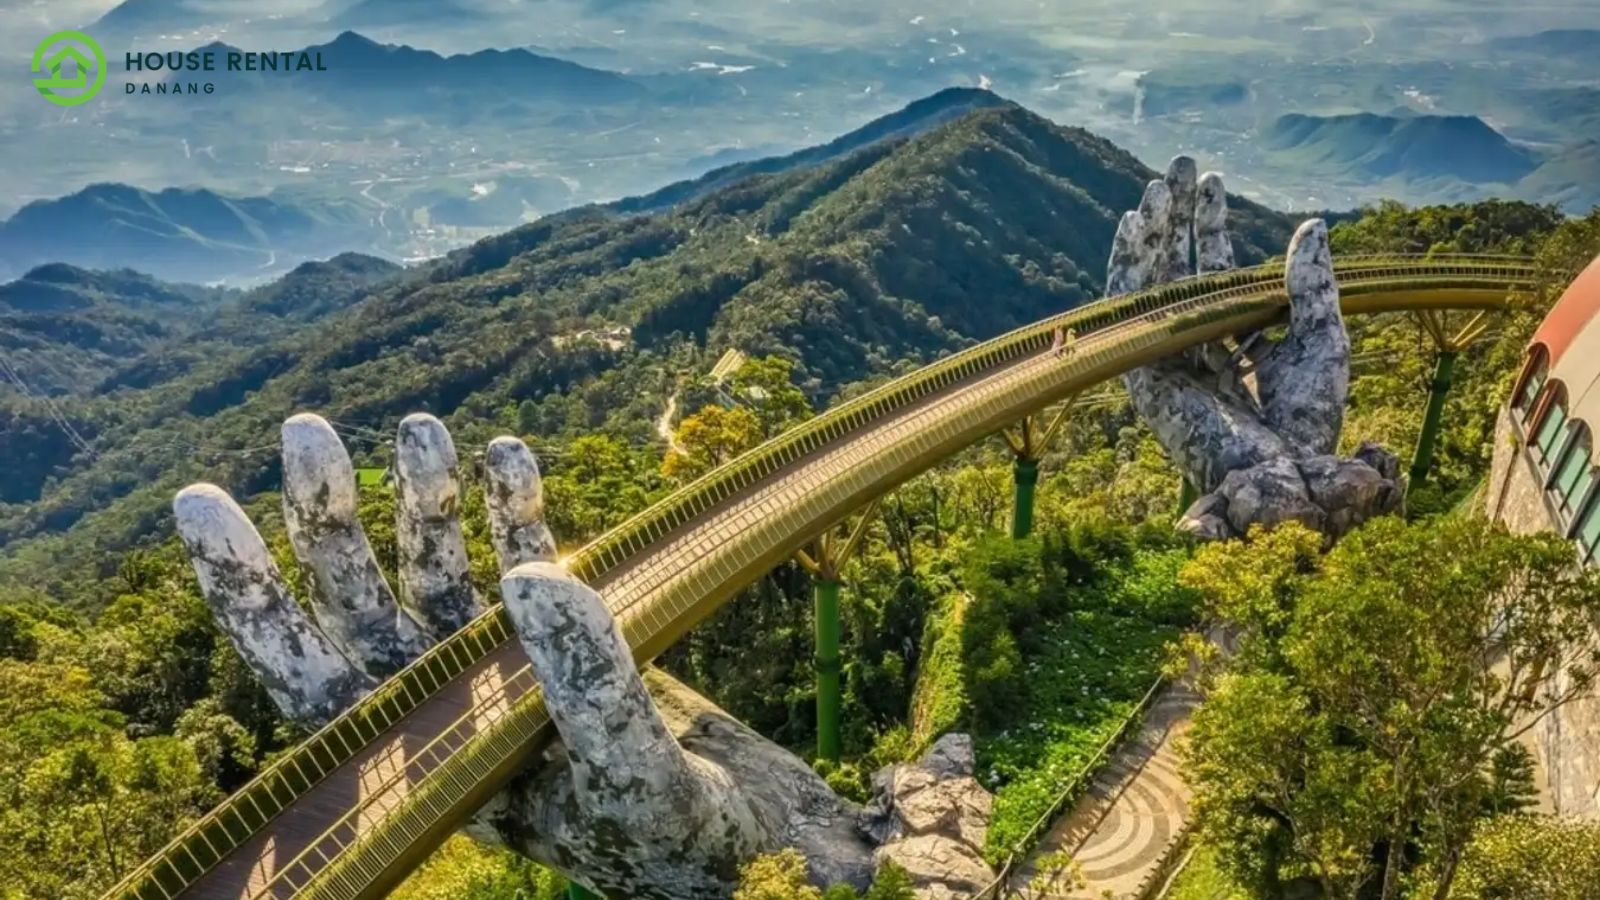 Keywords: bridge, mountain Revised description: A stunning bridge over a majestic mountain.